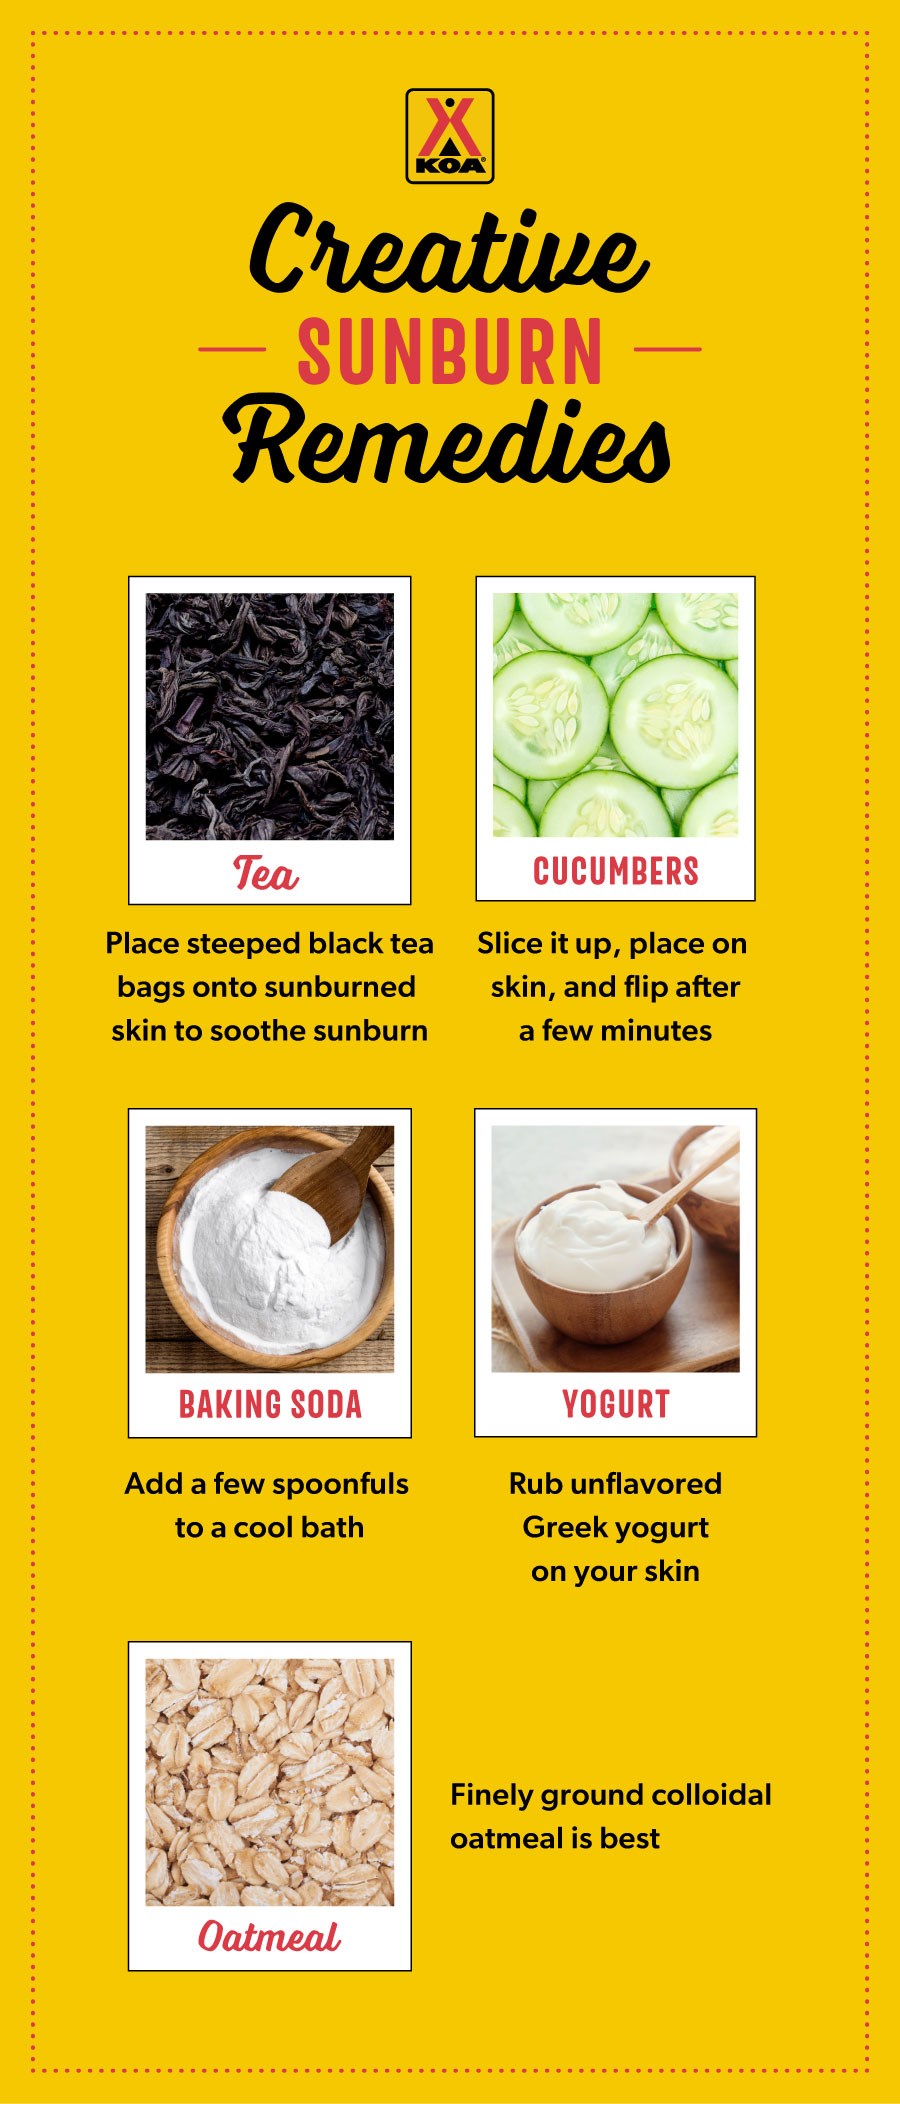 A micrographic showing creative sunburn remedies. The remedies are tea, cucumbers, baking soda, yogurt, and oatmeal. 